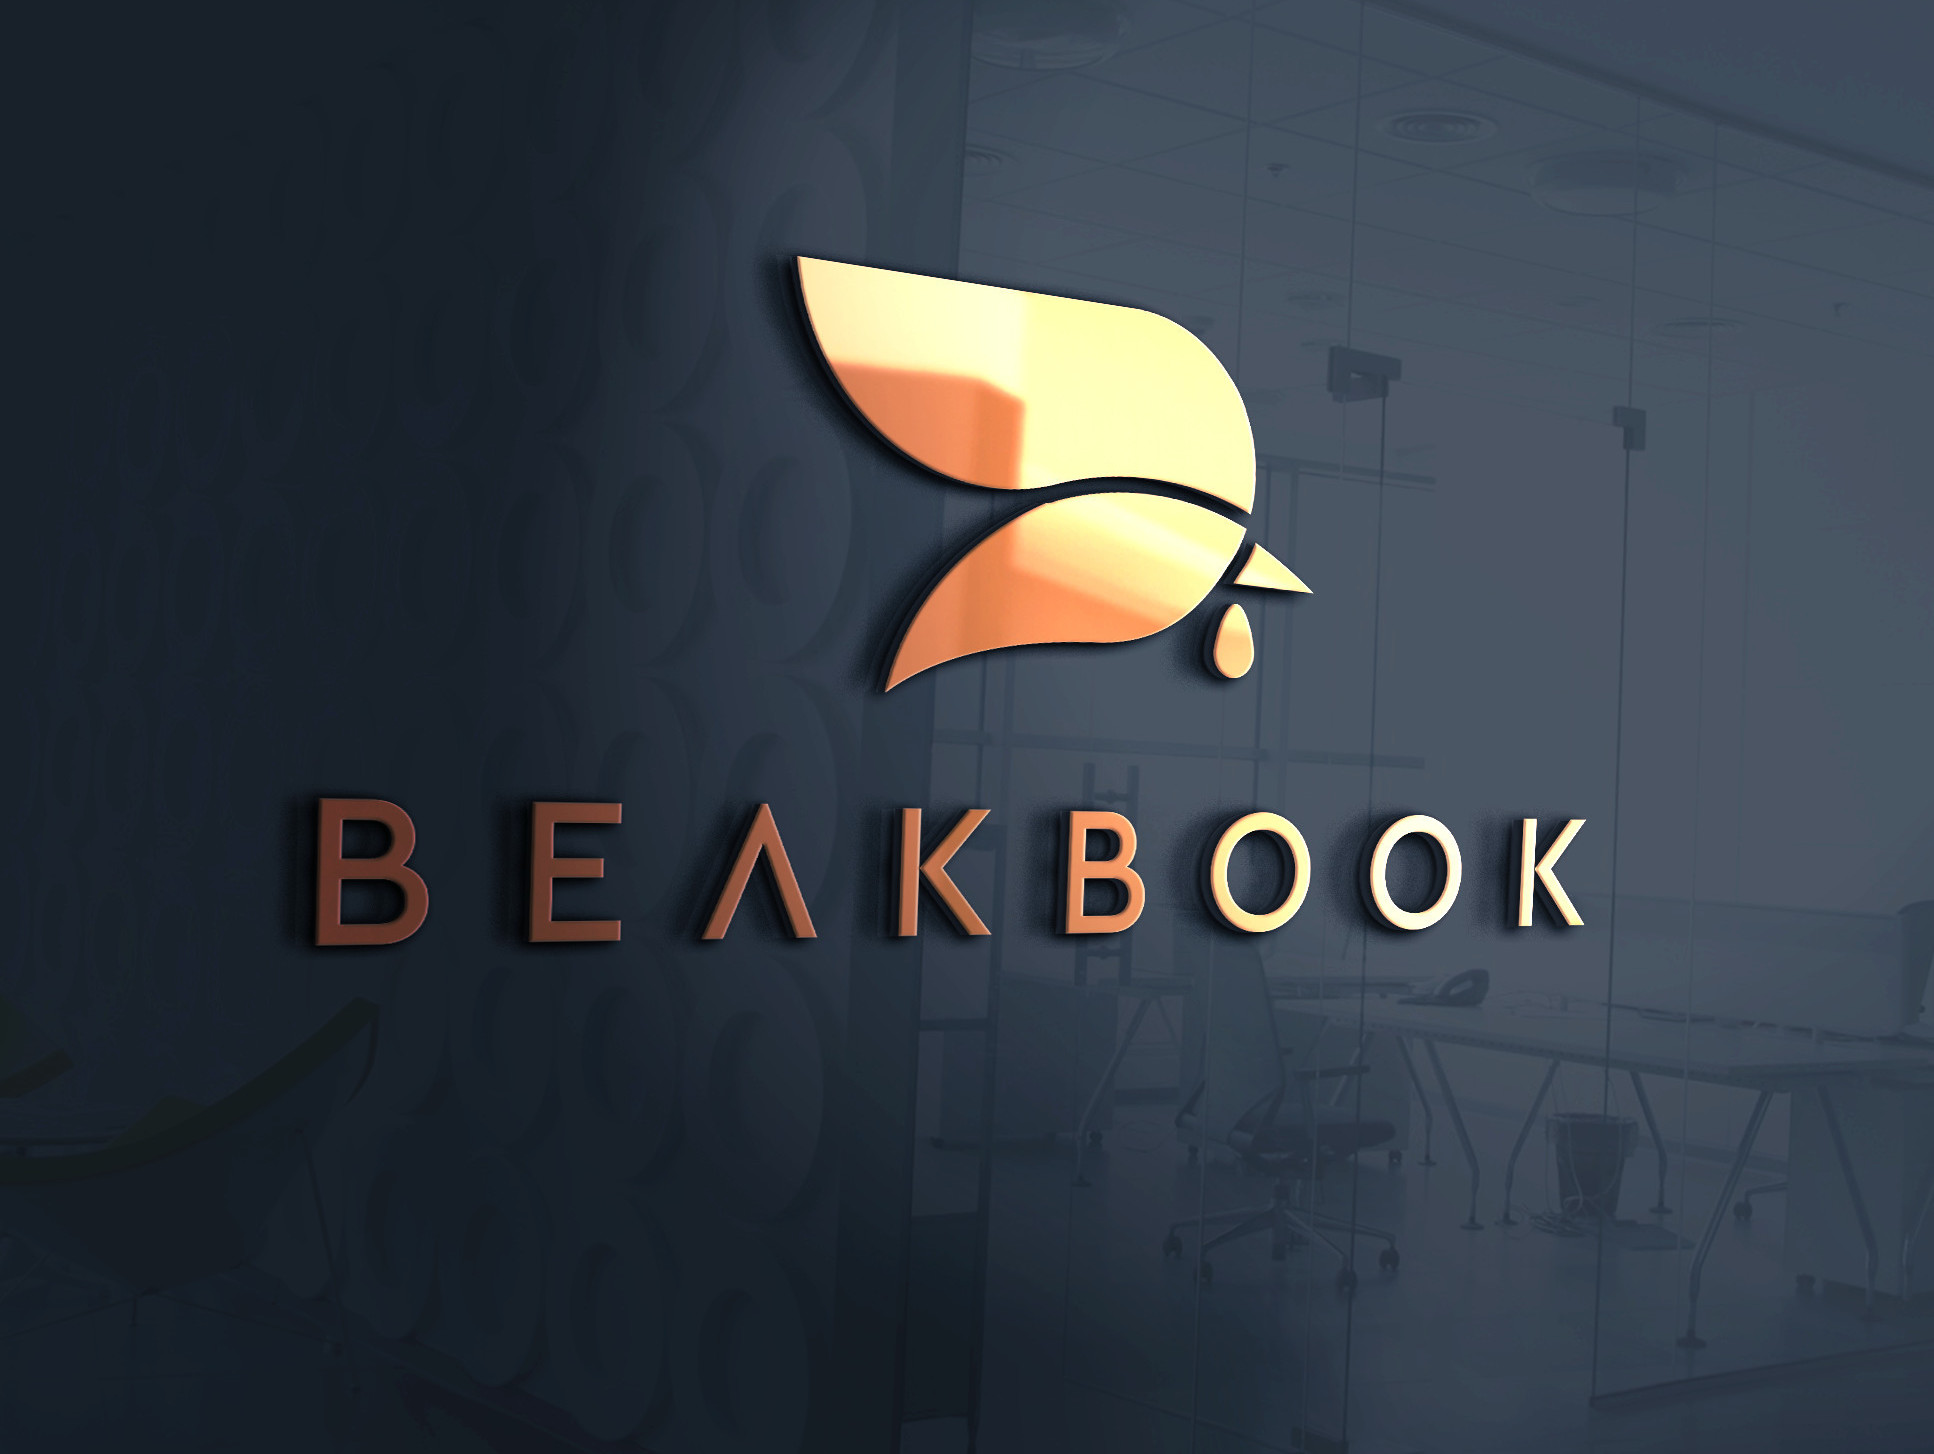 Beakbook logo